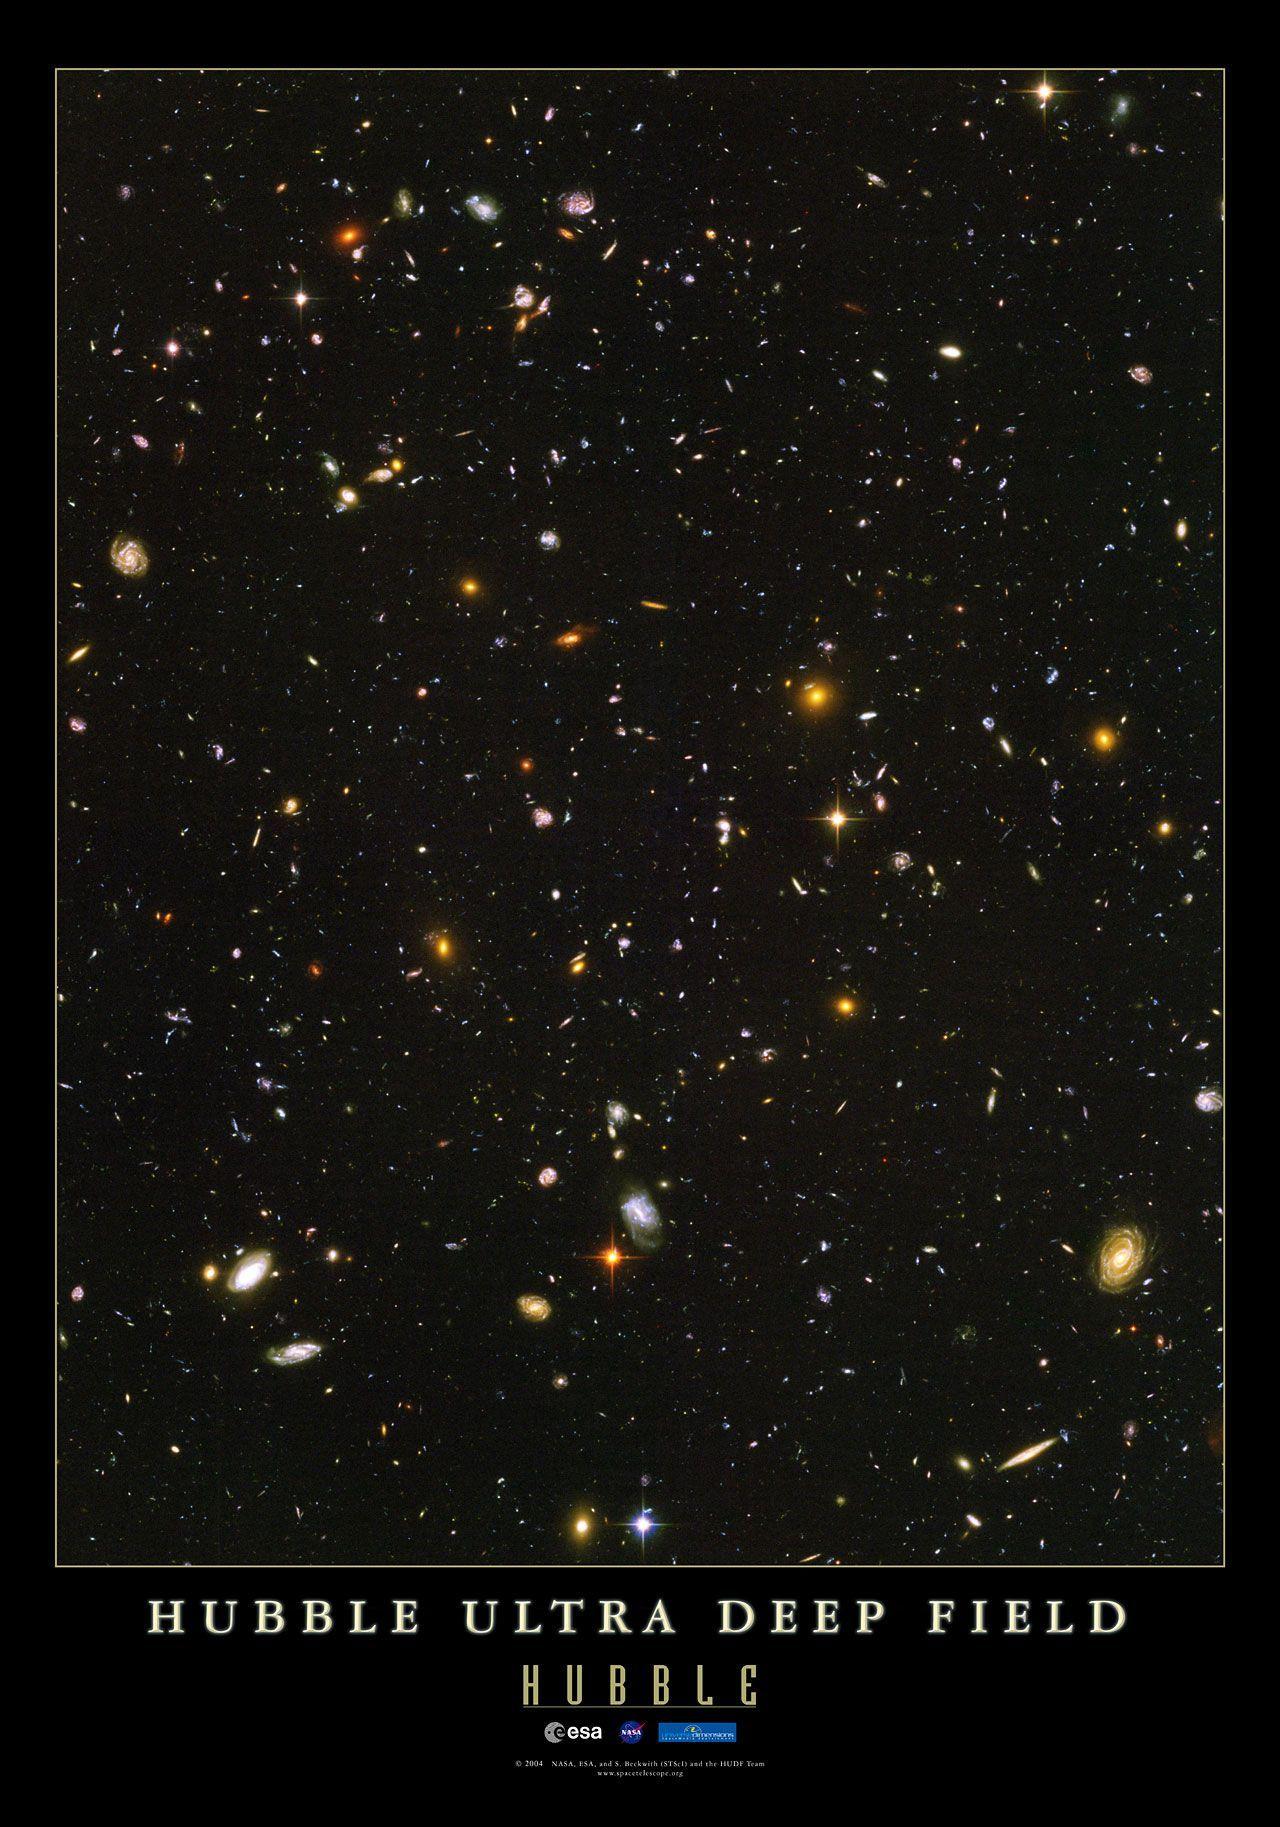 Hubble Ultra Deep Field Image 21 Pics. Wallpaperiz